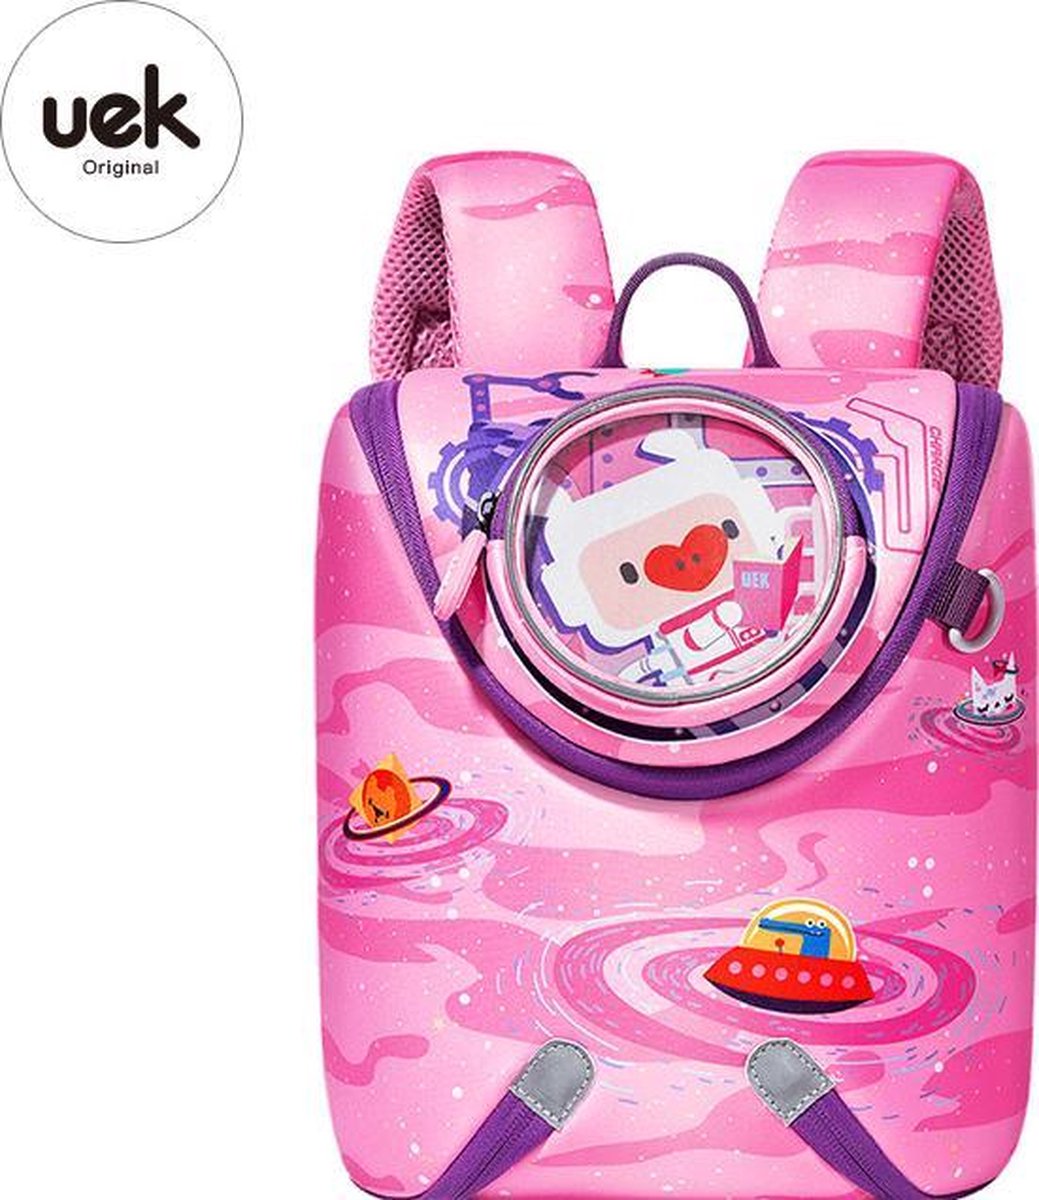 Uek kids- one-piece style backpack S- rugzak met charm sleutelhanger en stickers-meisjes-pink